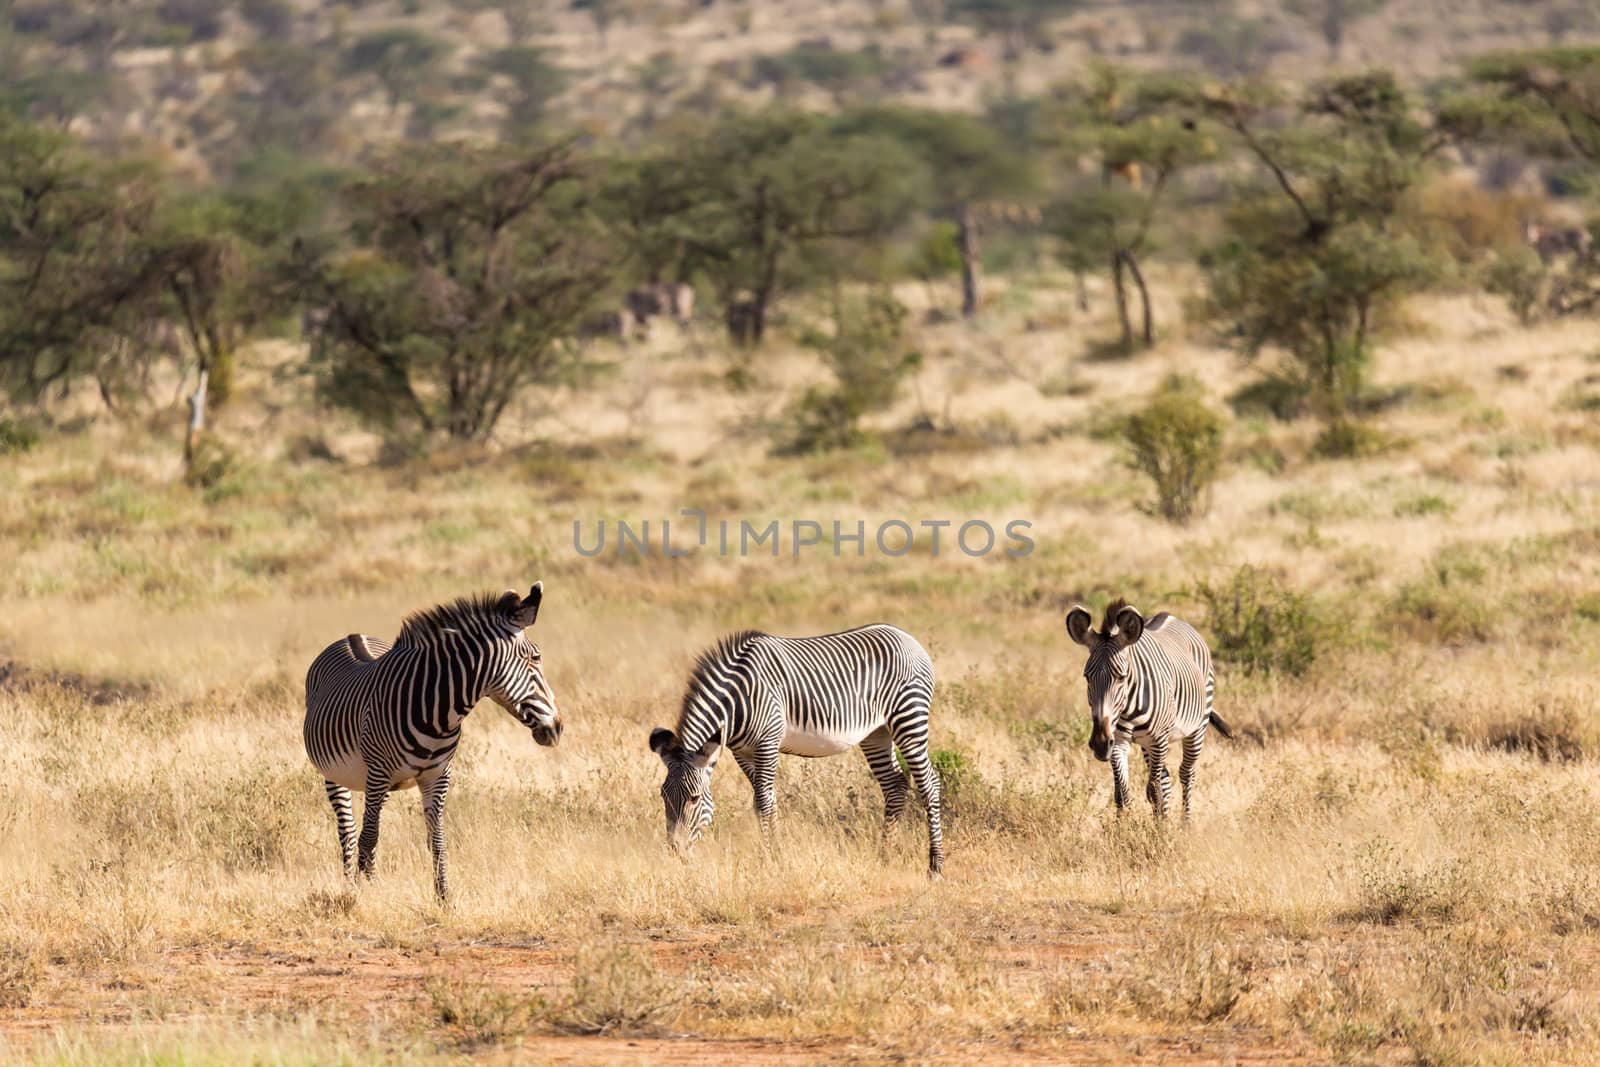 Large herd with zebras grazing in the savannah of Kenya by 25ehaag6